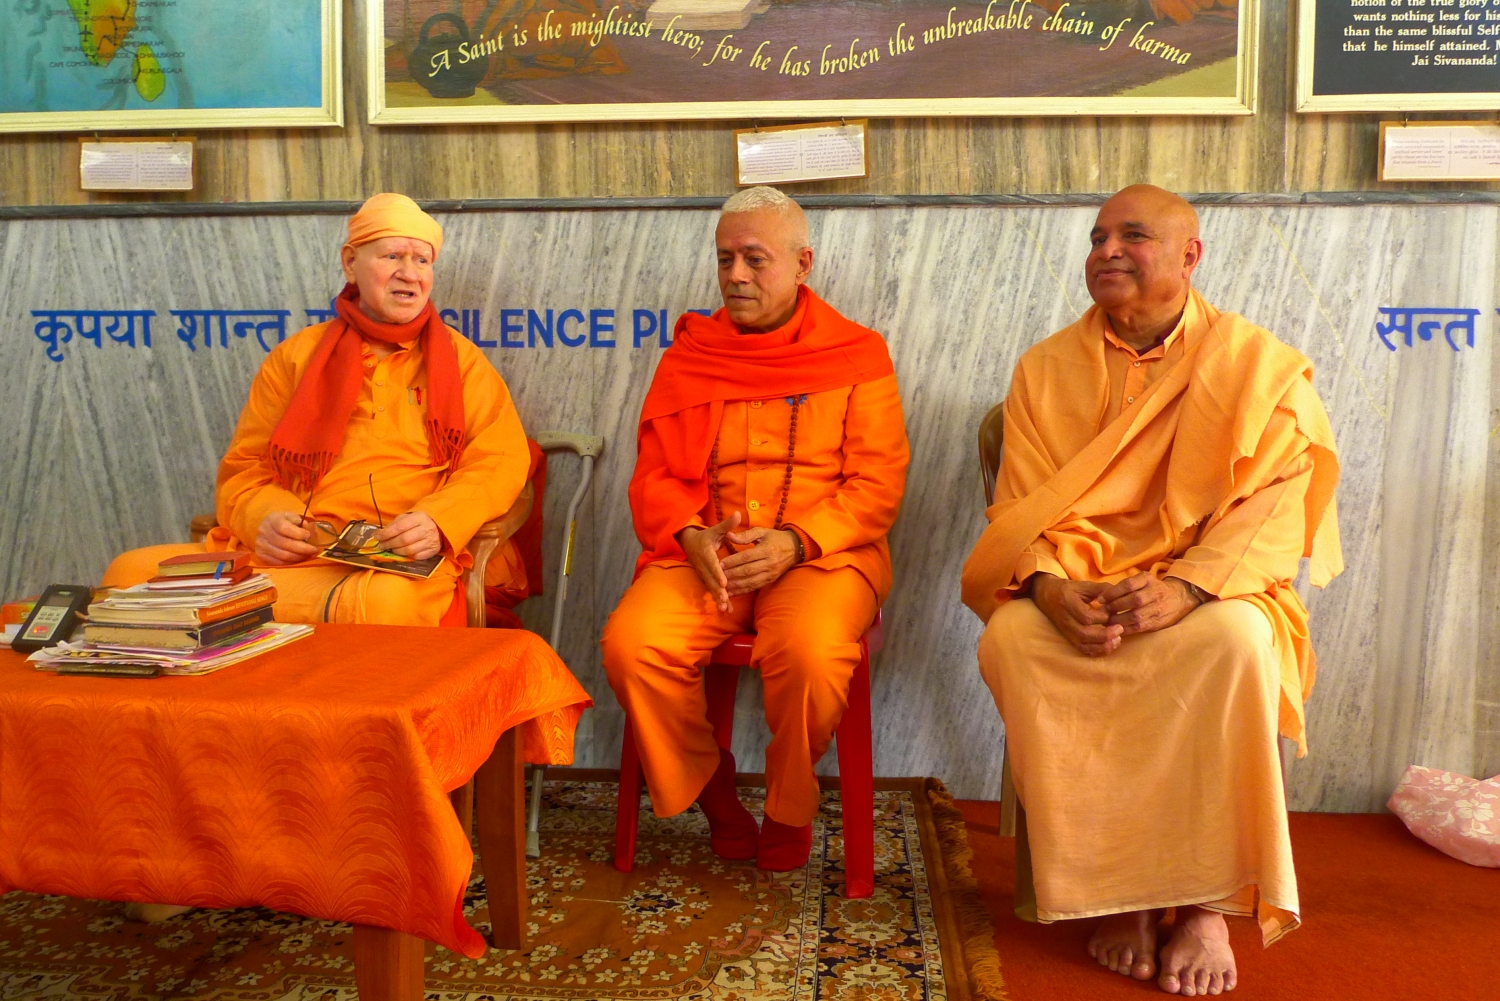 Encontro de Jorge Veiga e Castro, Gr. Mestre Internacional do Yoga, com H.H. Svámin Vimlánanda Sarasvatí Mahá Rája - Shivánanda Áshrama, rshikesh, Índia - 2013, Março